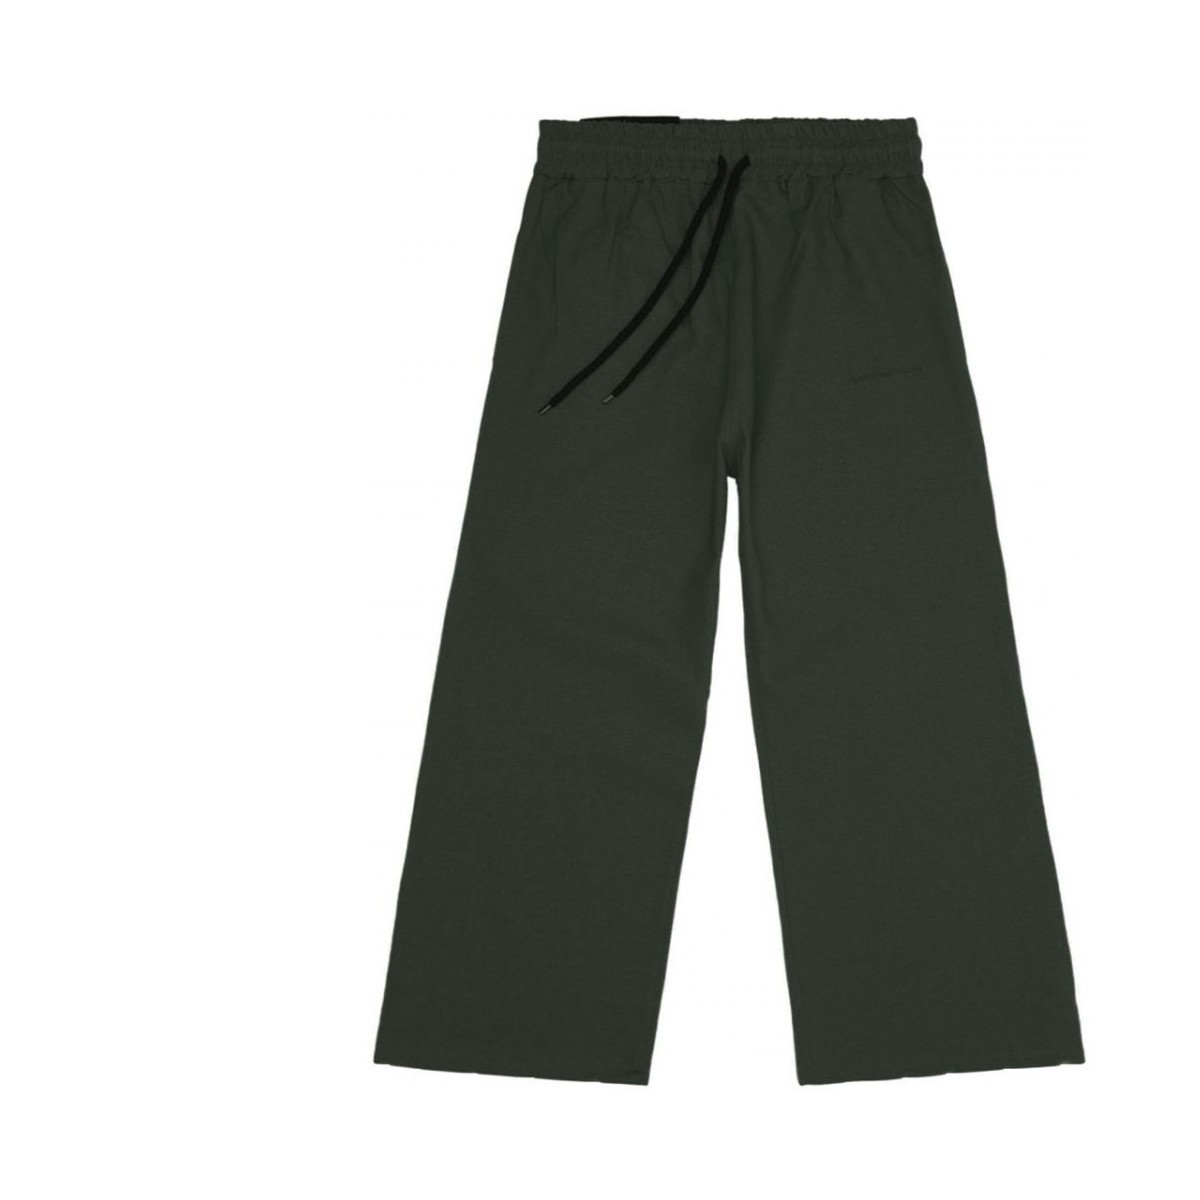 Vêtements Femme Jeans Ko Samui Tailors Pantalon basique en lin oversize vert Vert